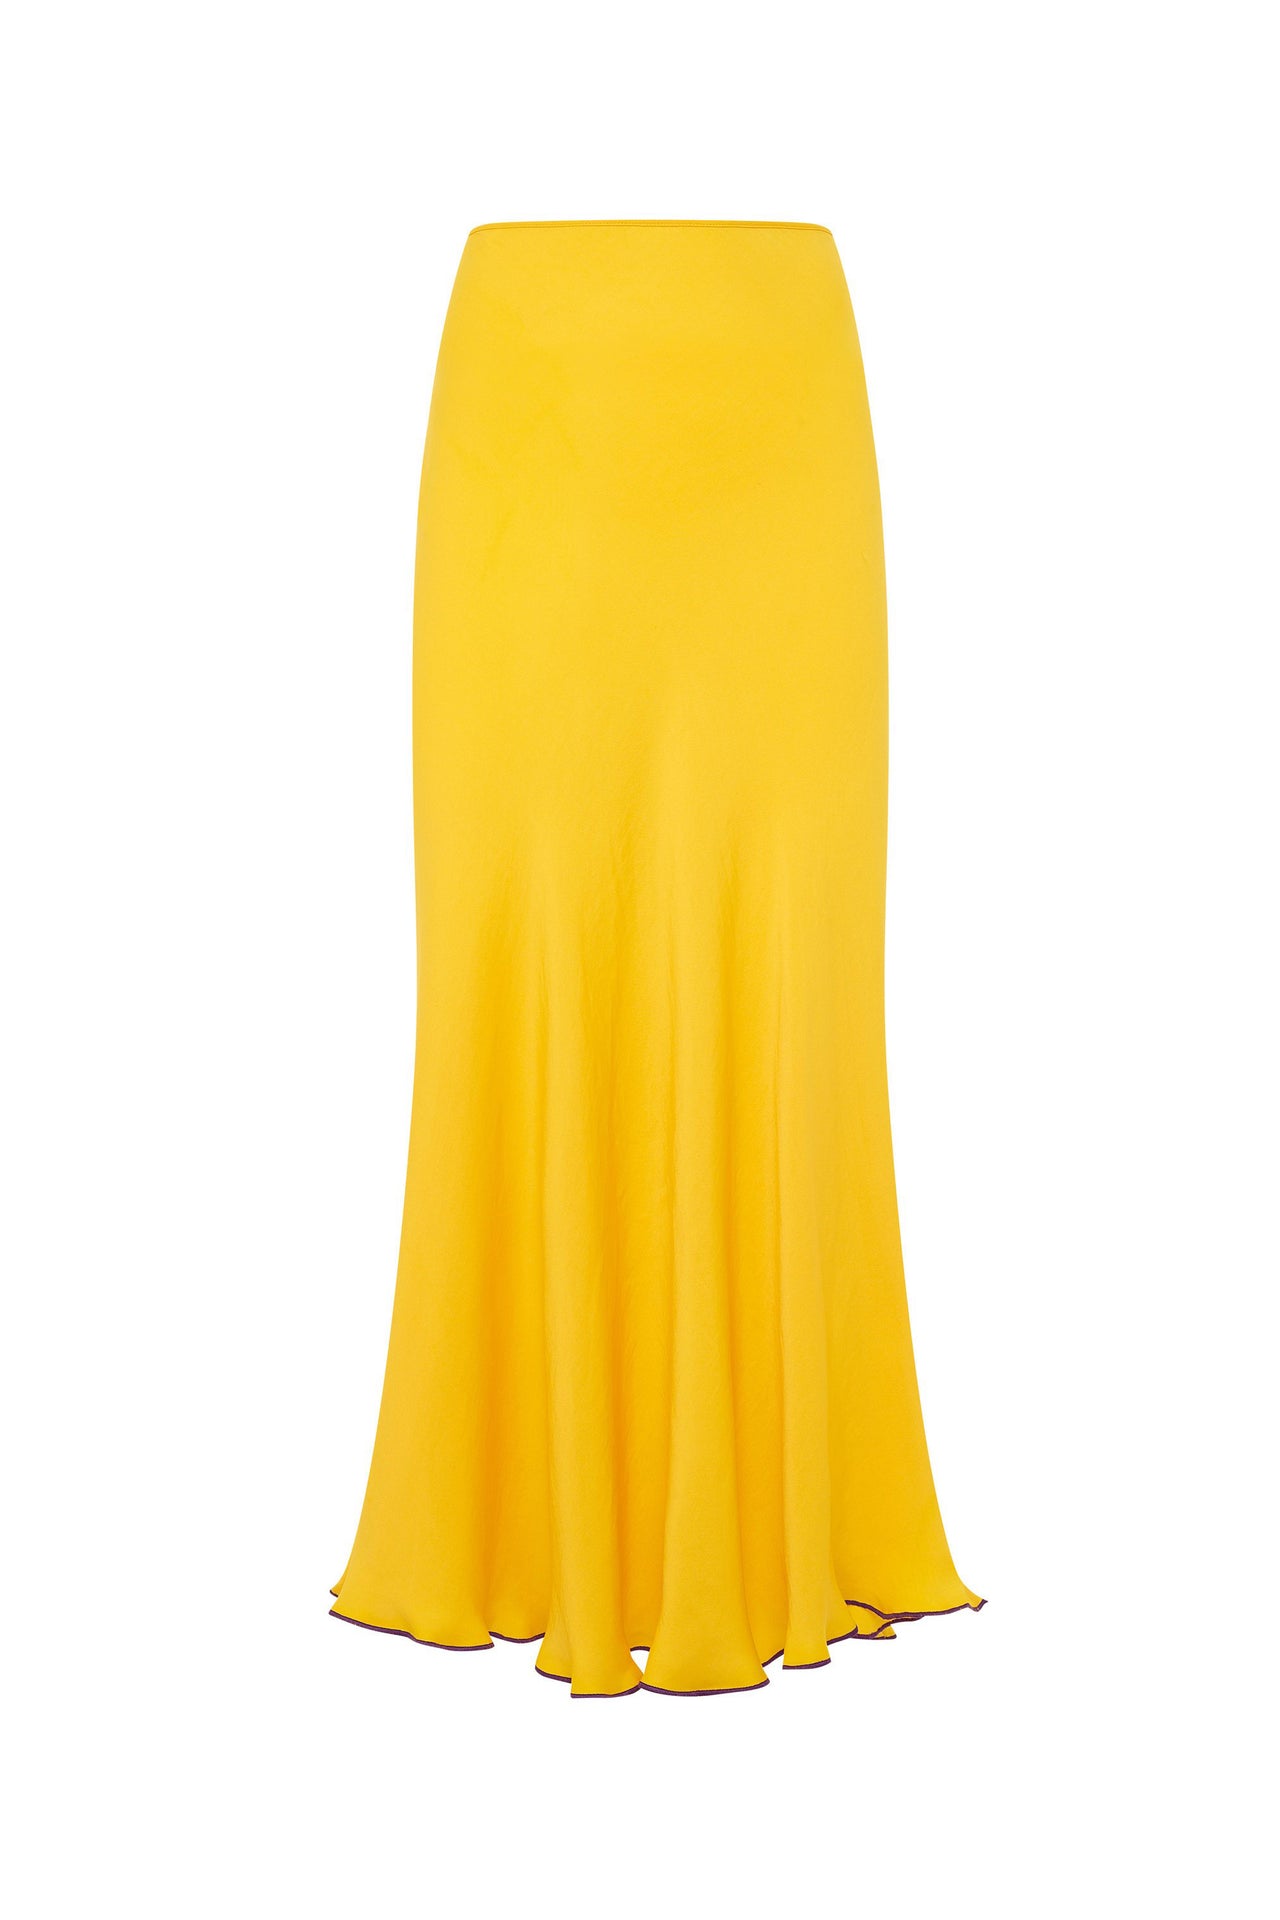 Public Figure | Siedres | Prim Low Rise Midi Skirt Yellow